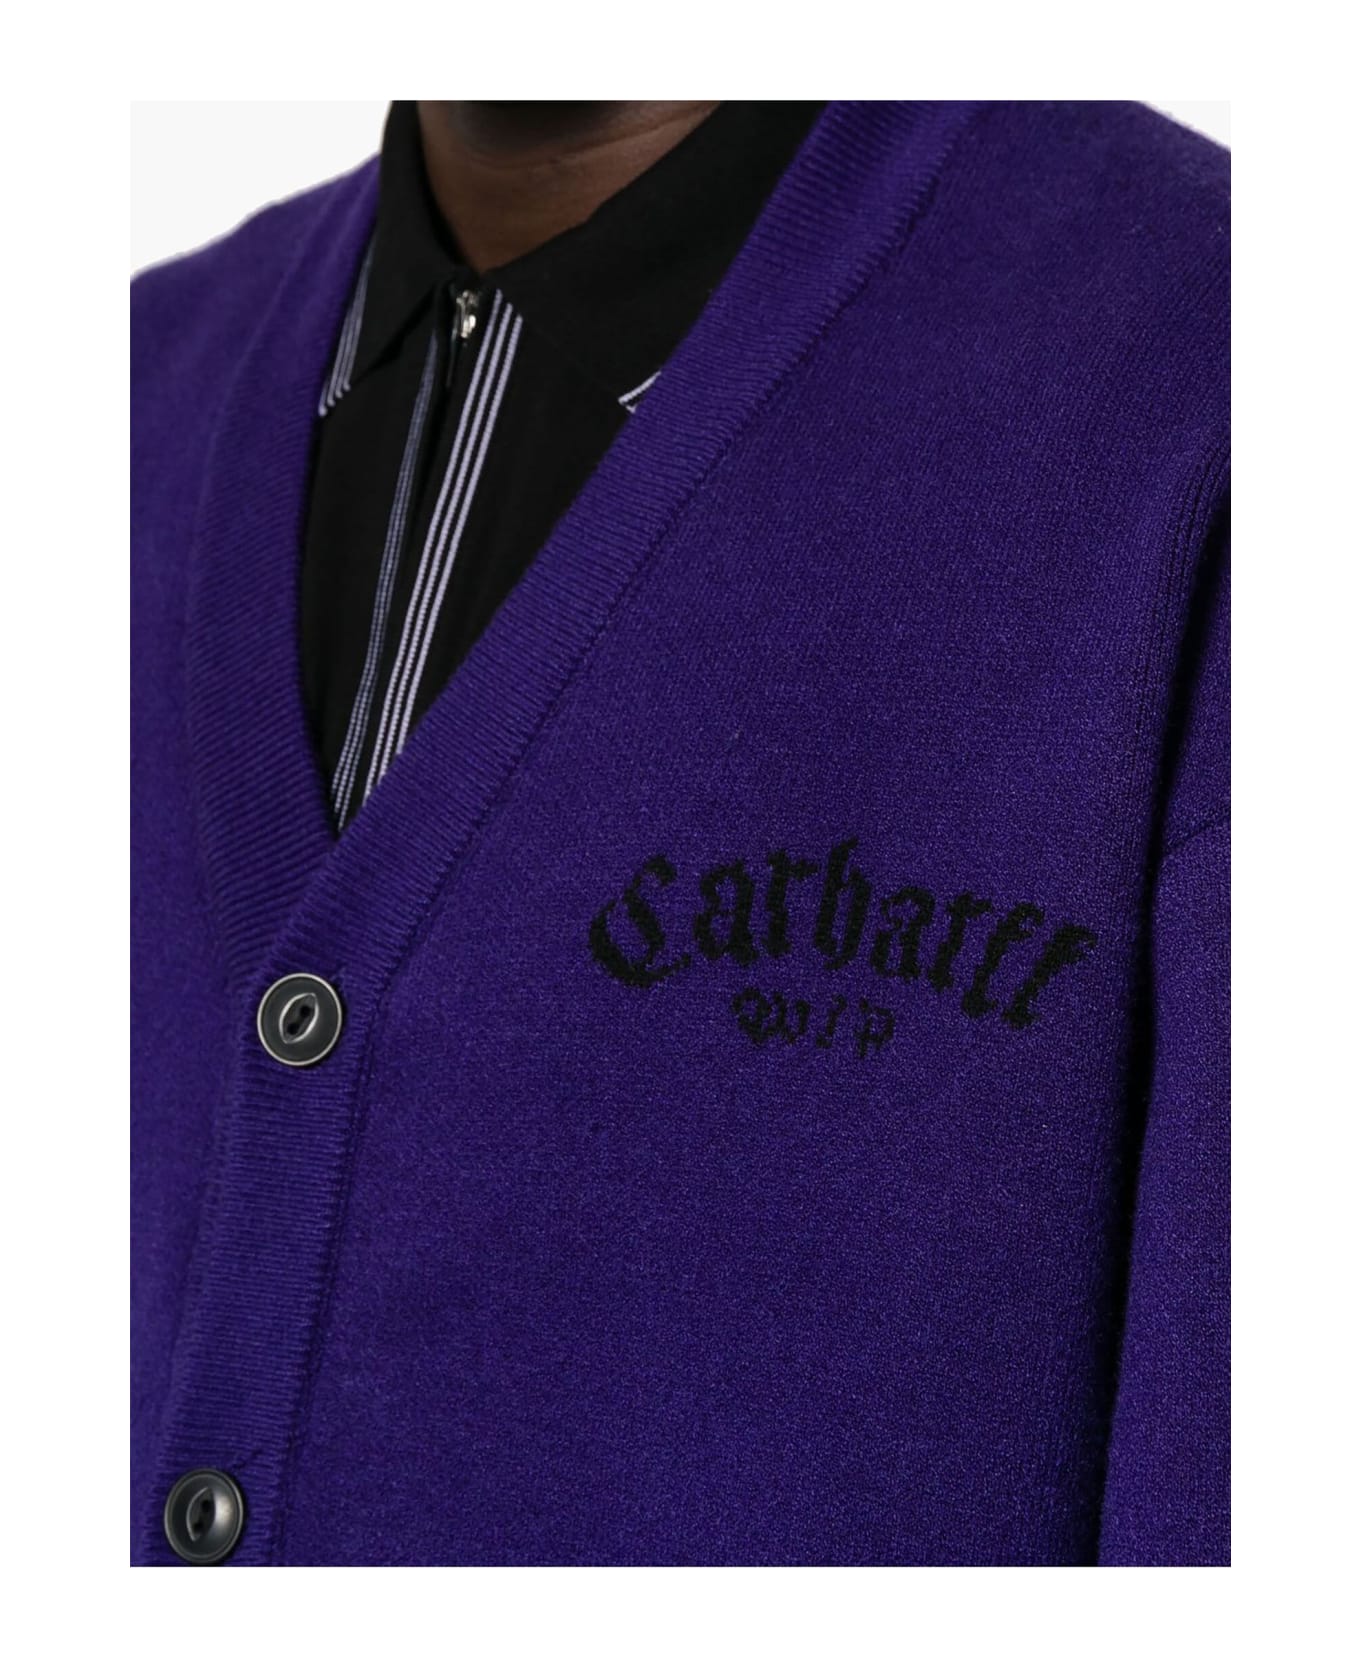 Carhartt Sweaters - Purple カーディガン